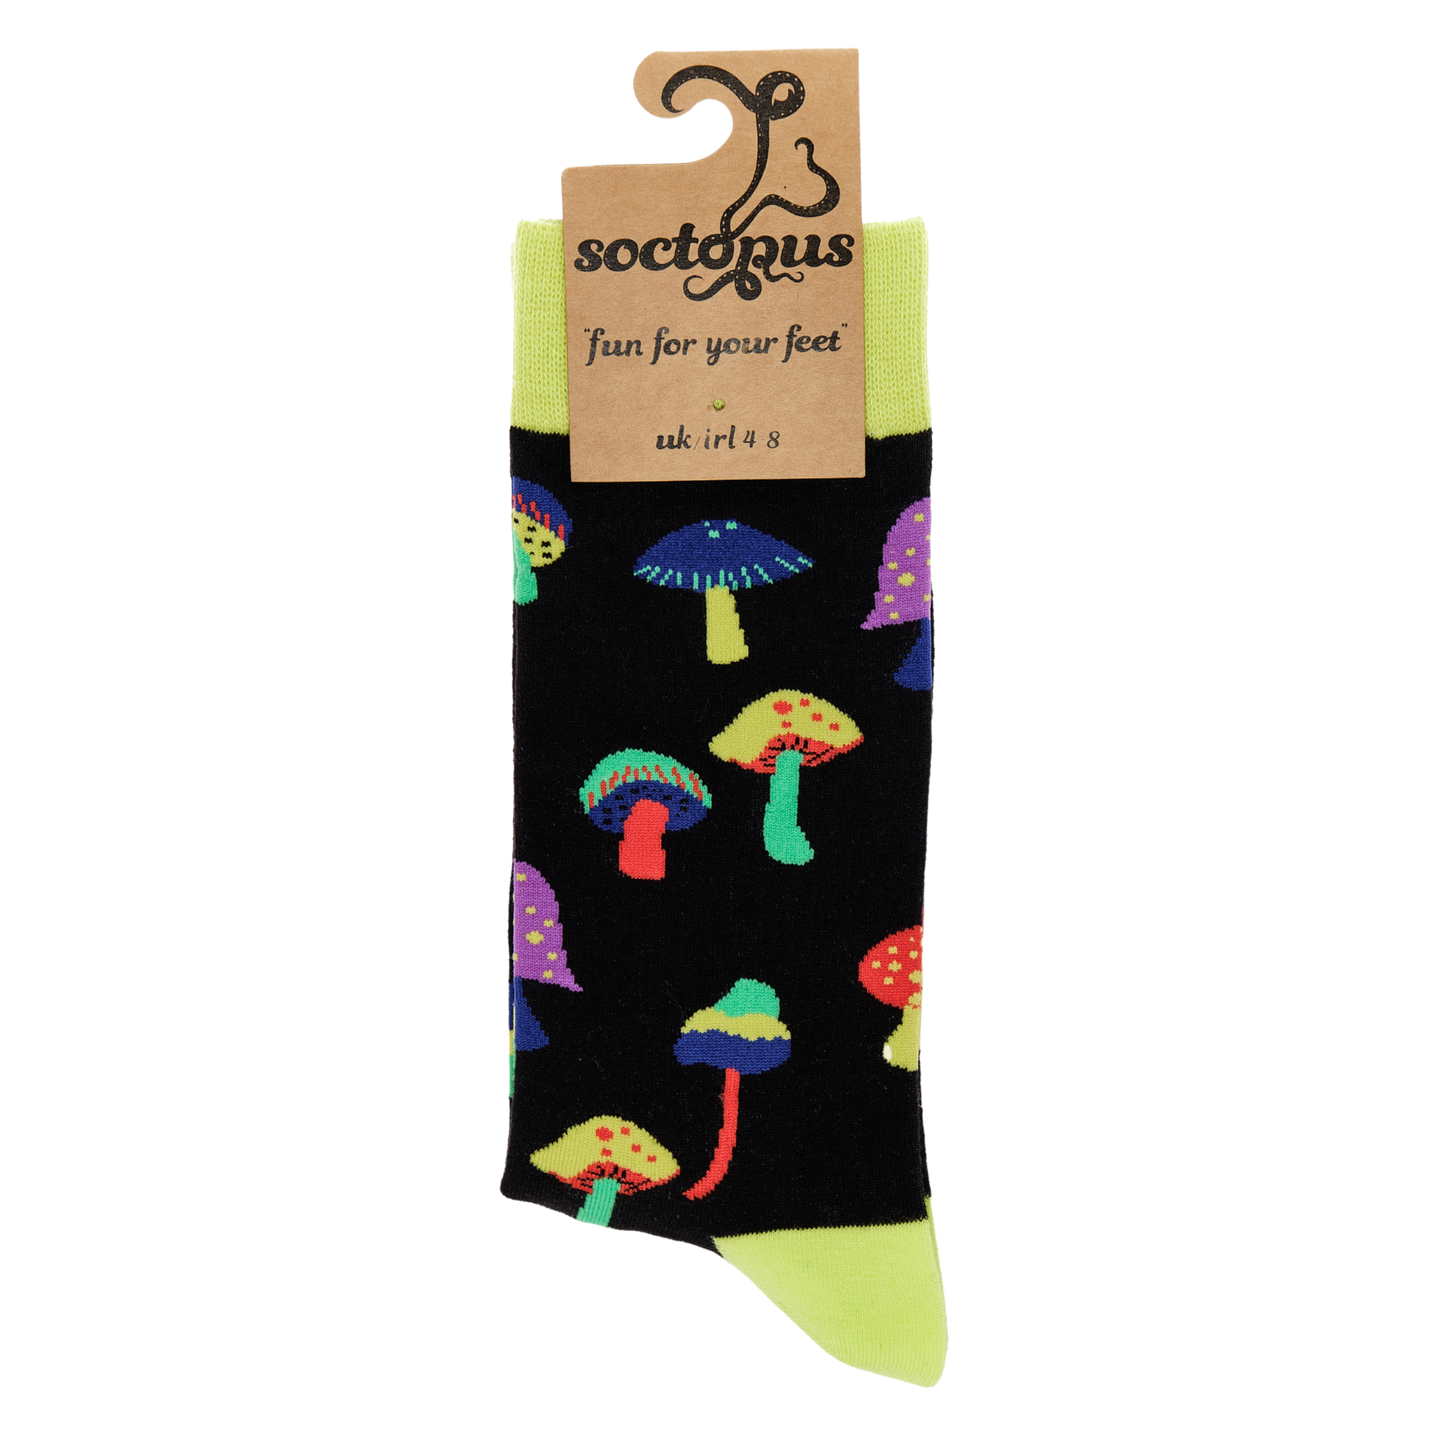 Mushroom Trippin' Socks